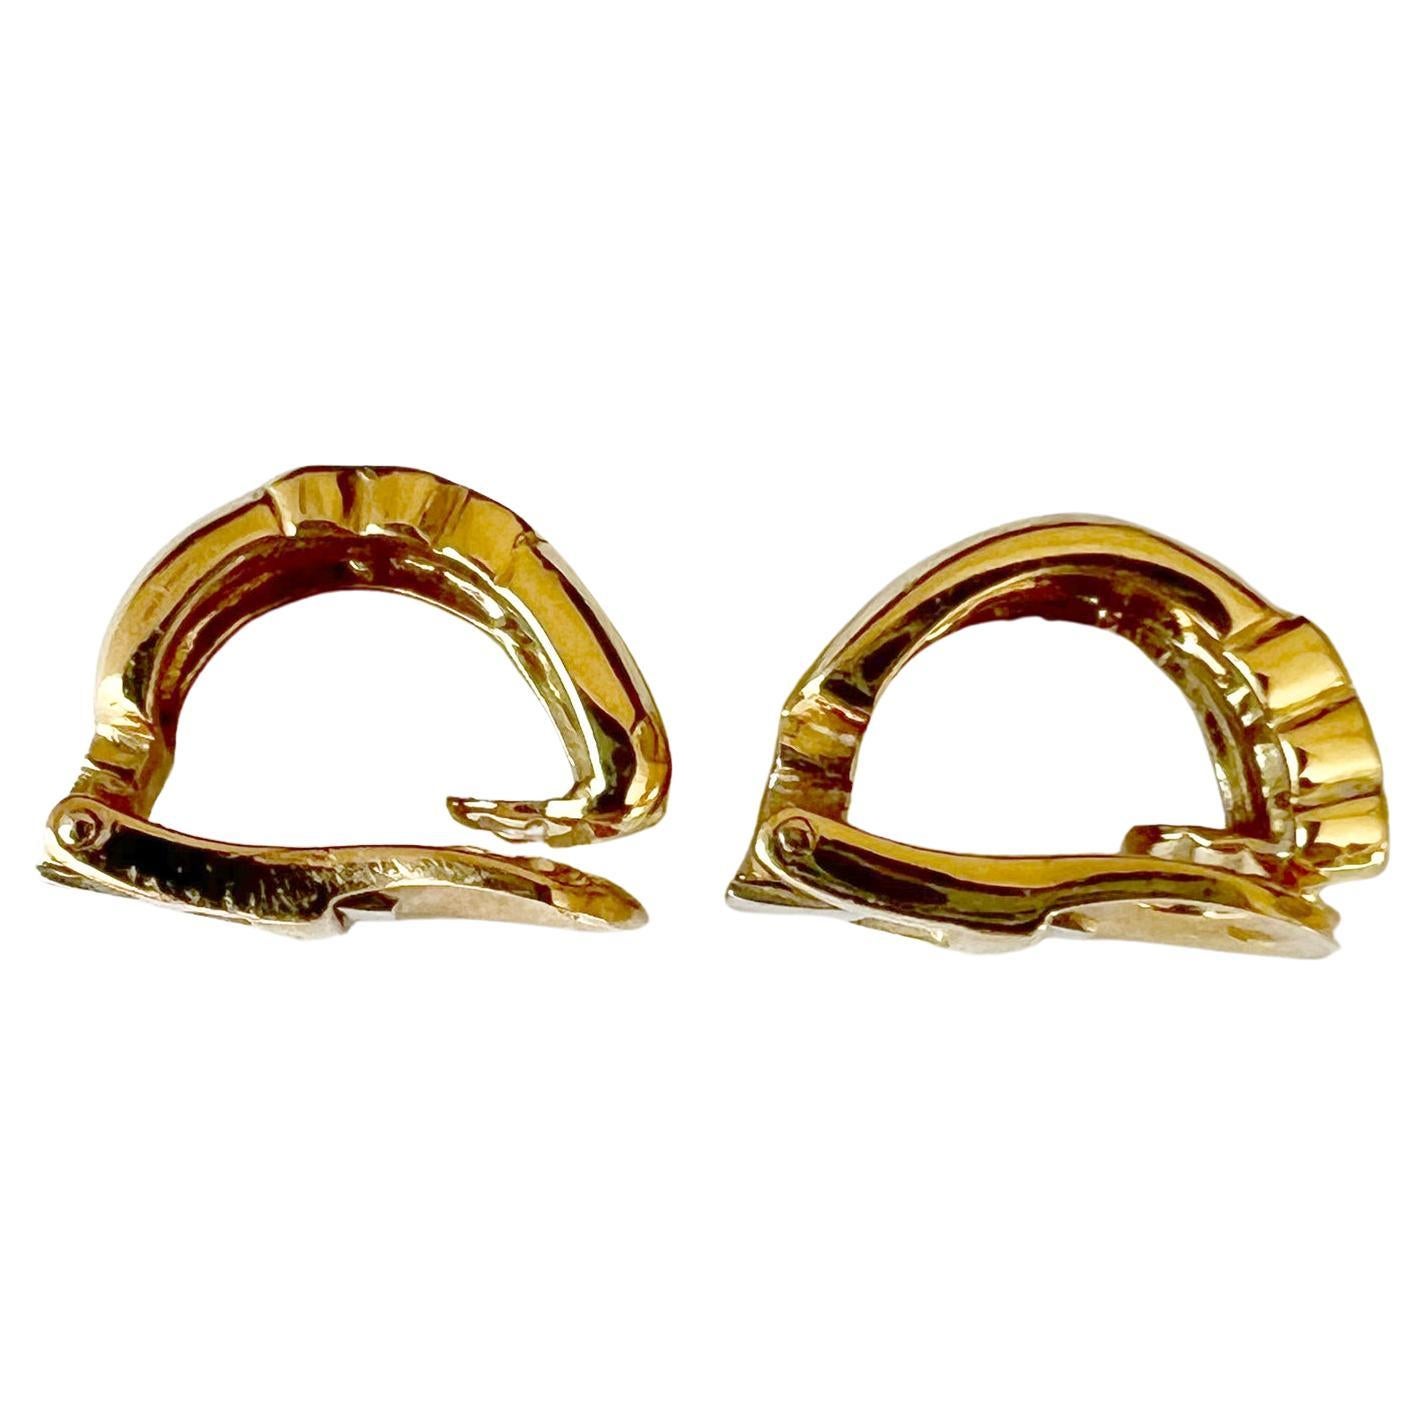 Vintage Boucheron 18K gold and diamond small hoop earrings, circa 1960's.  Earrings measure 5.8